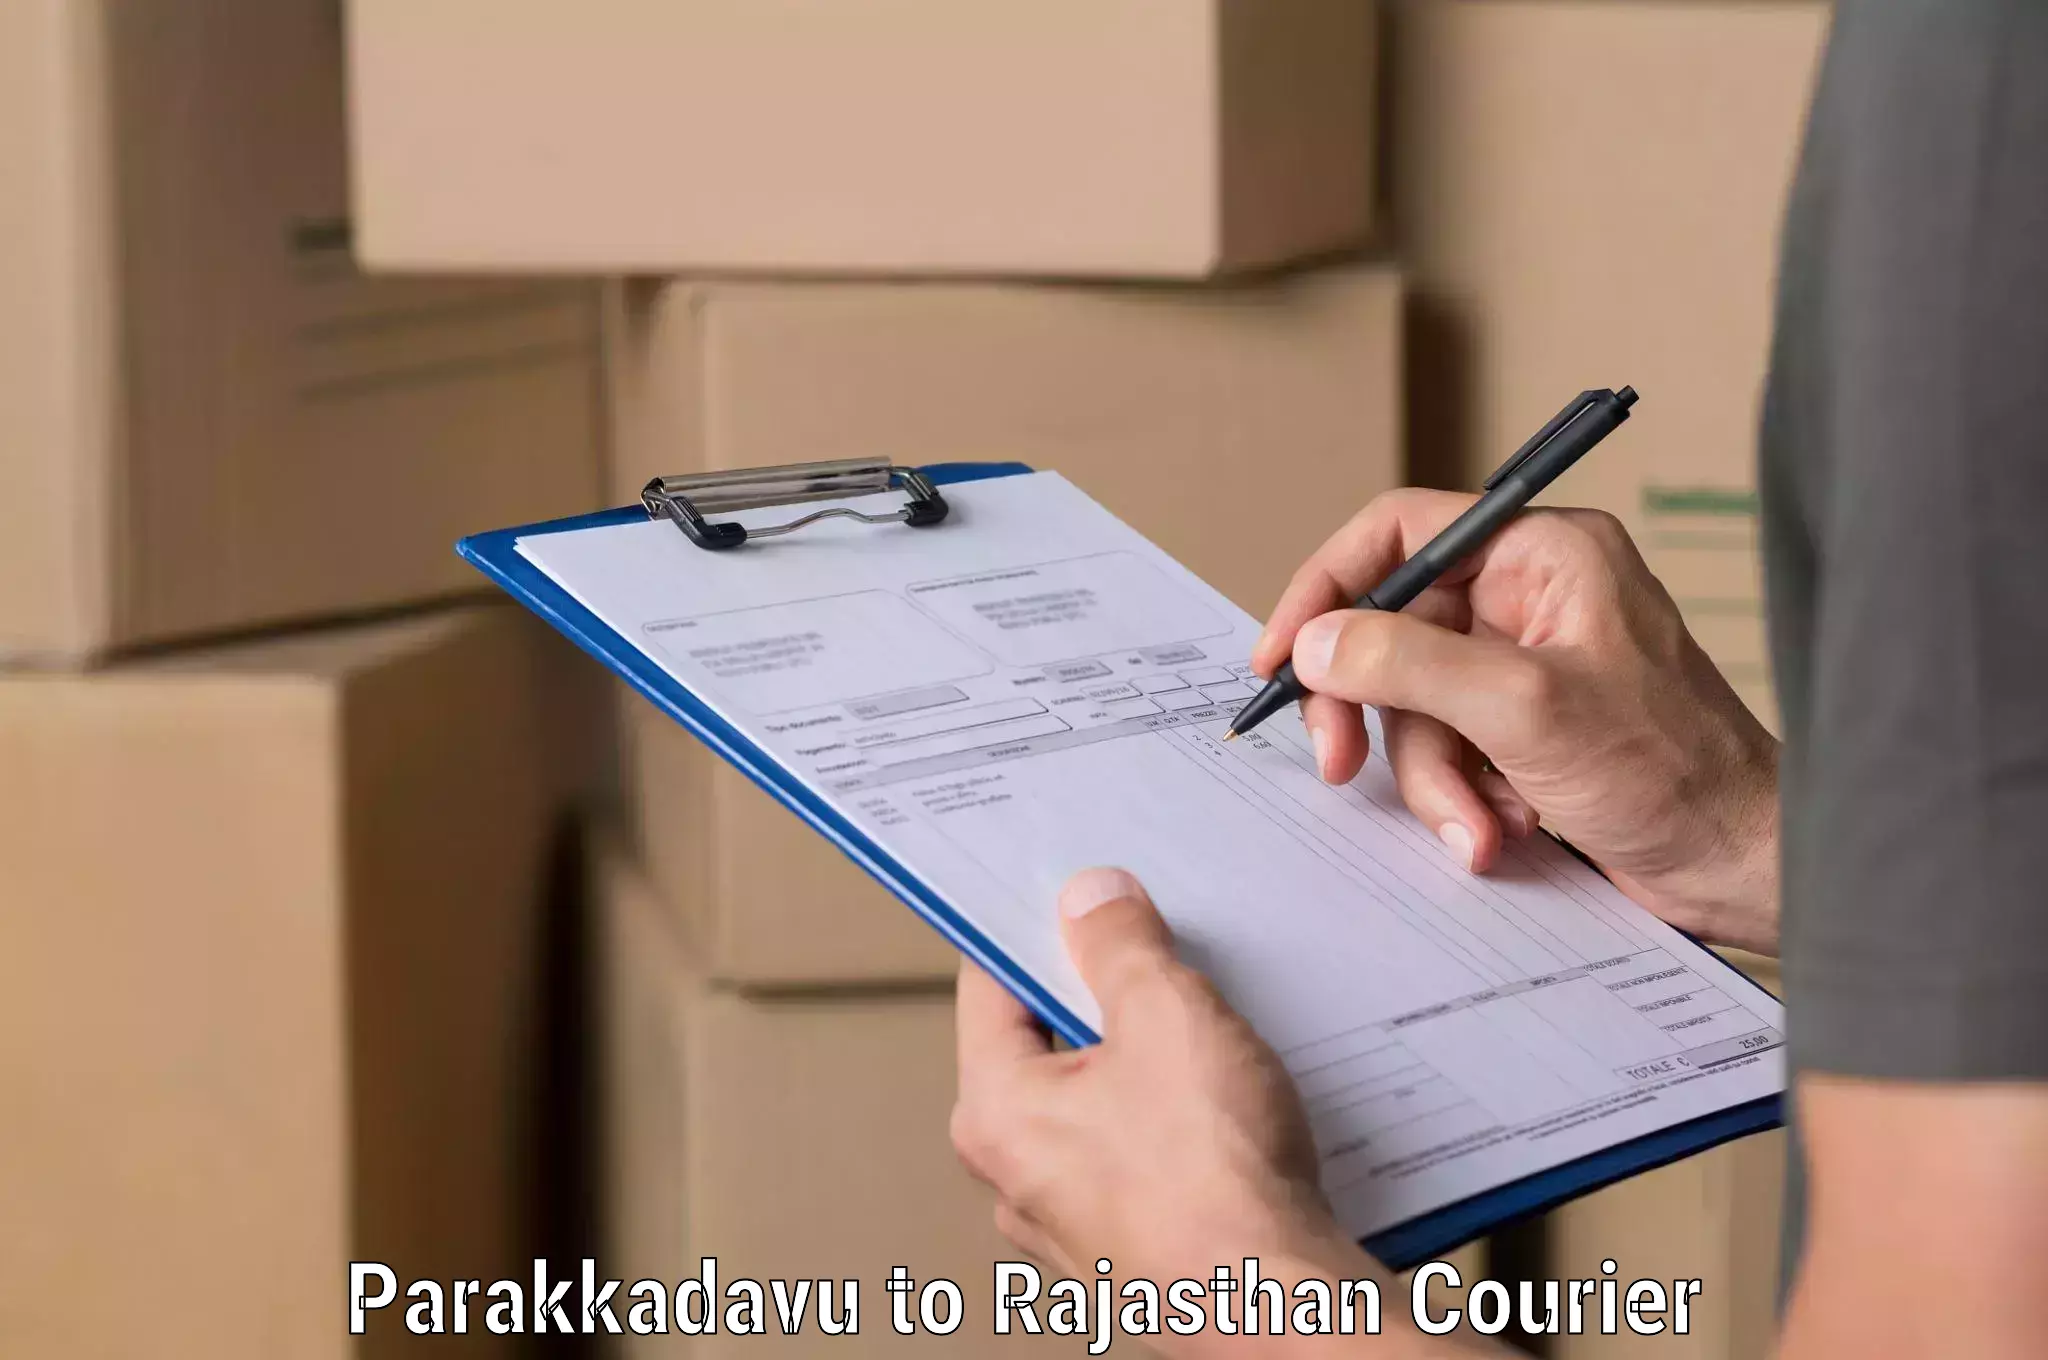 Package tracking Parakkadavu to Sri Vijaynagar